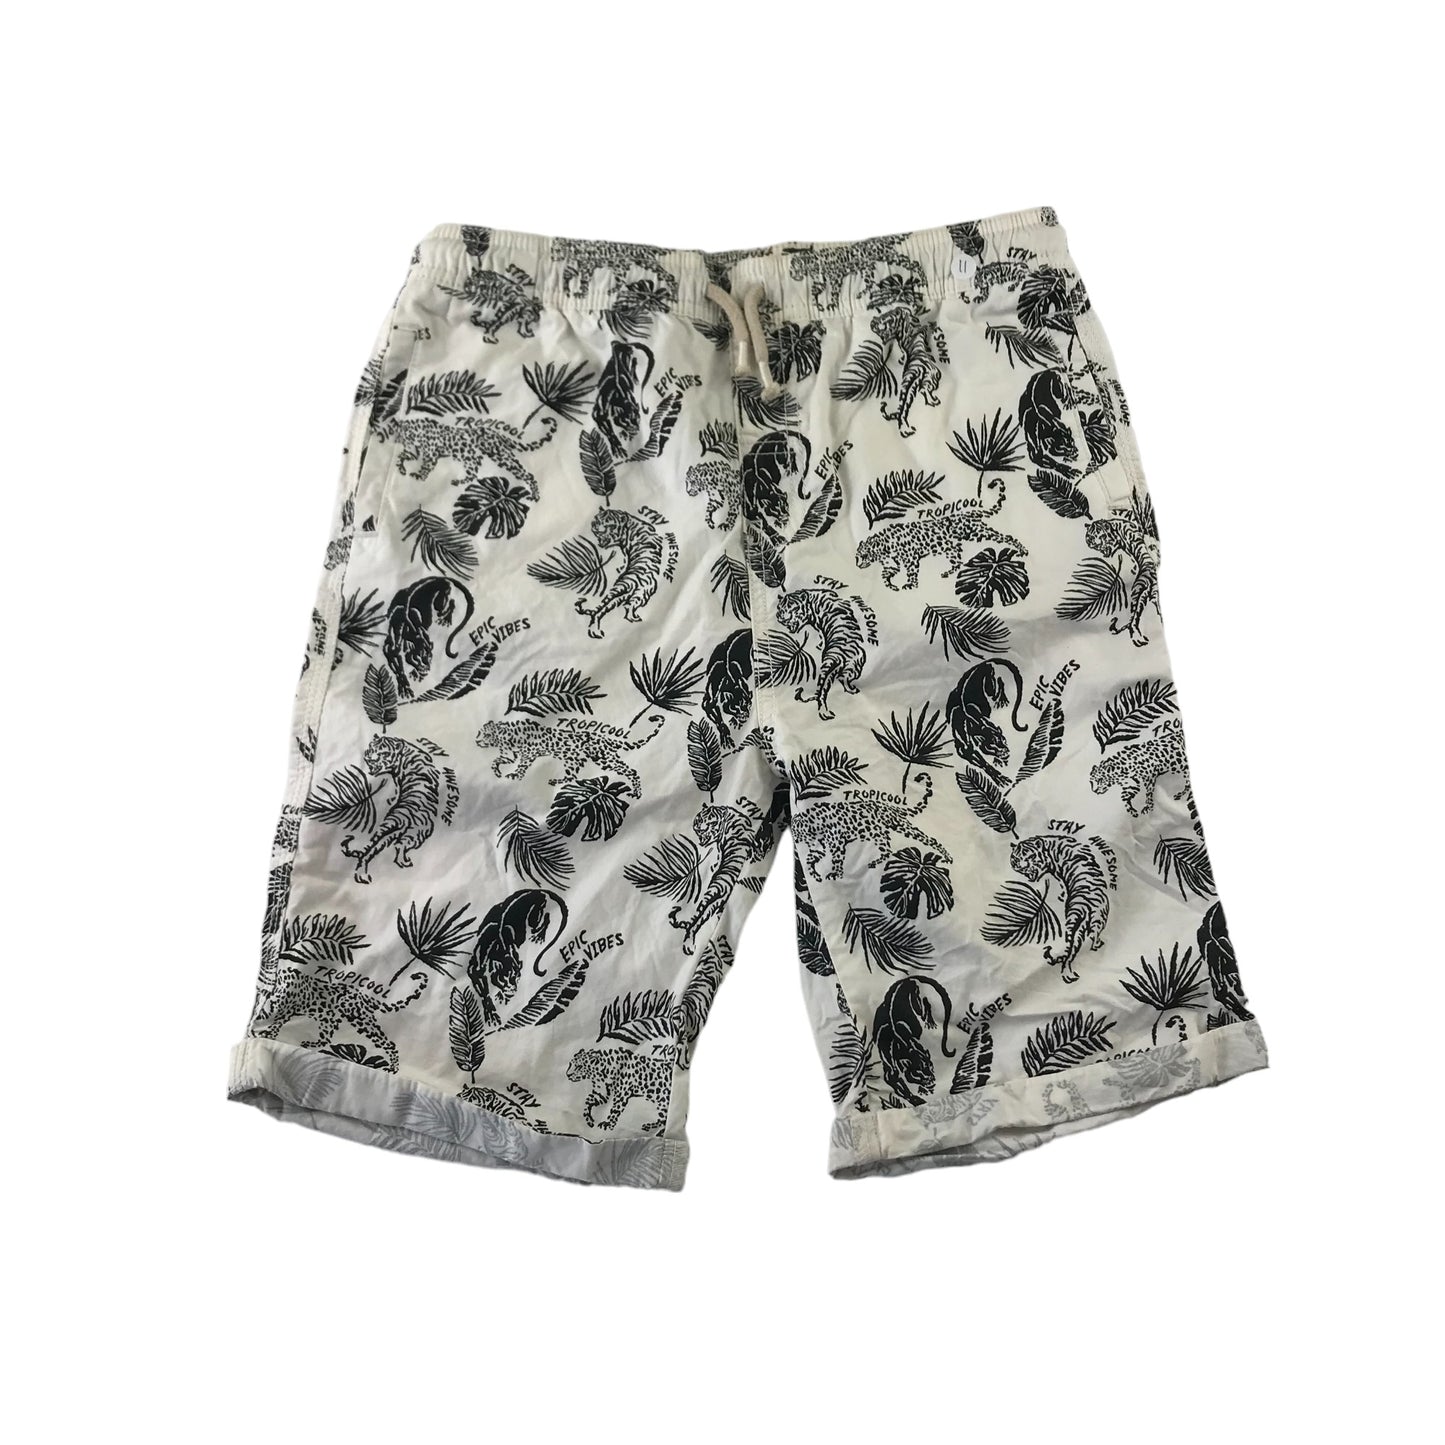 Tu Shorts Bundle Age 11 Plain Black and Tiger Floral Print Shorts Pull Up Cotton